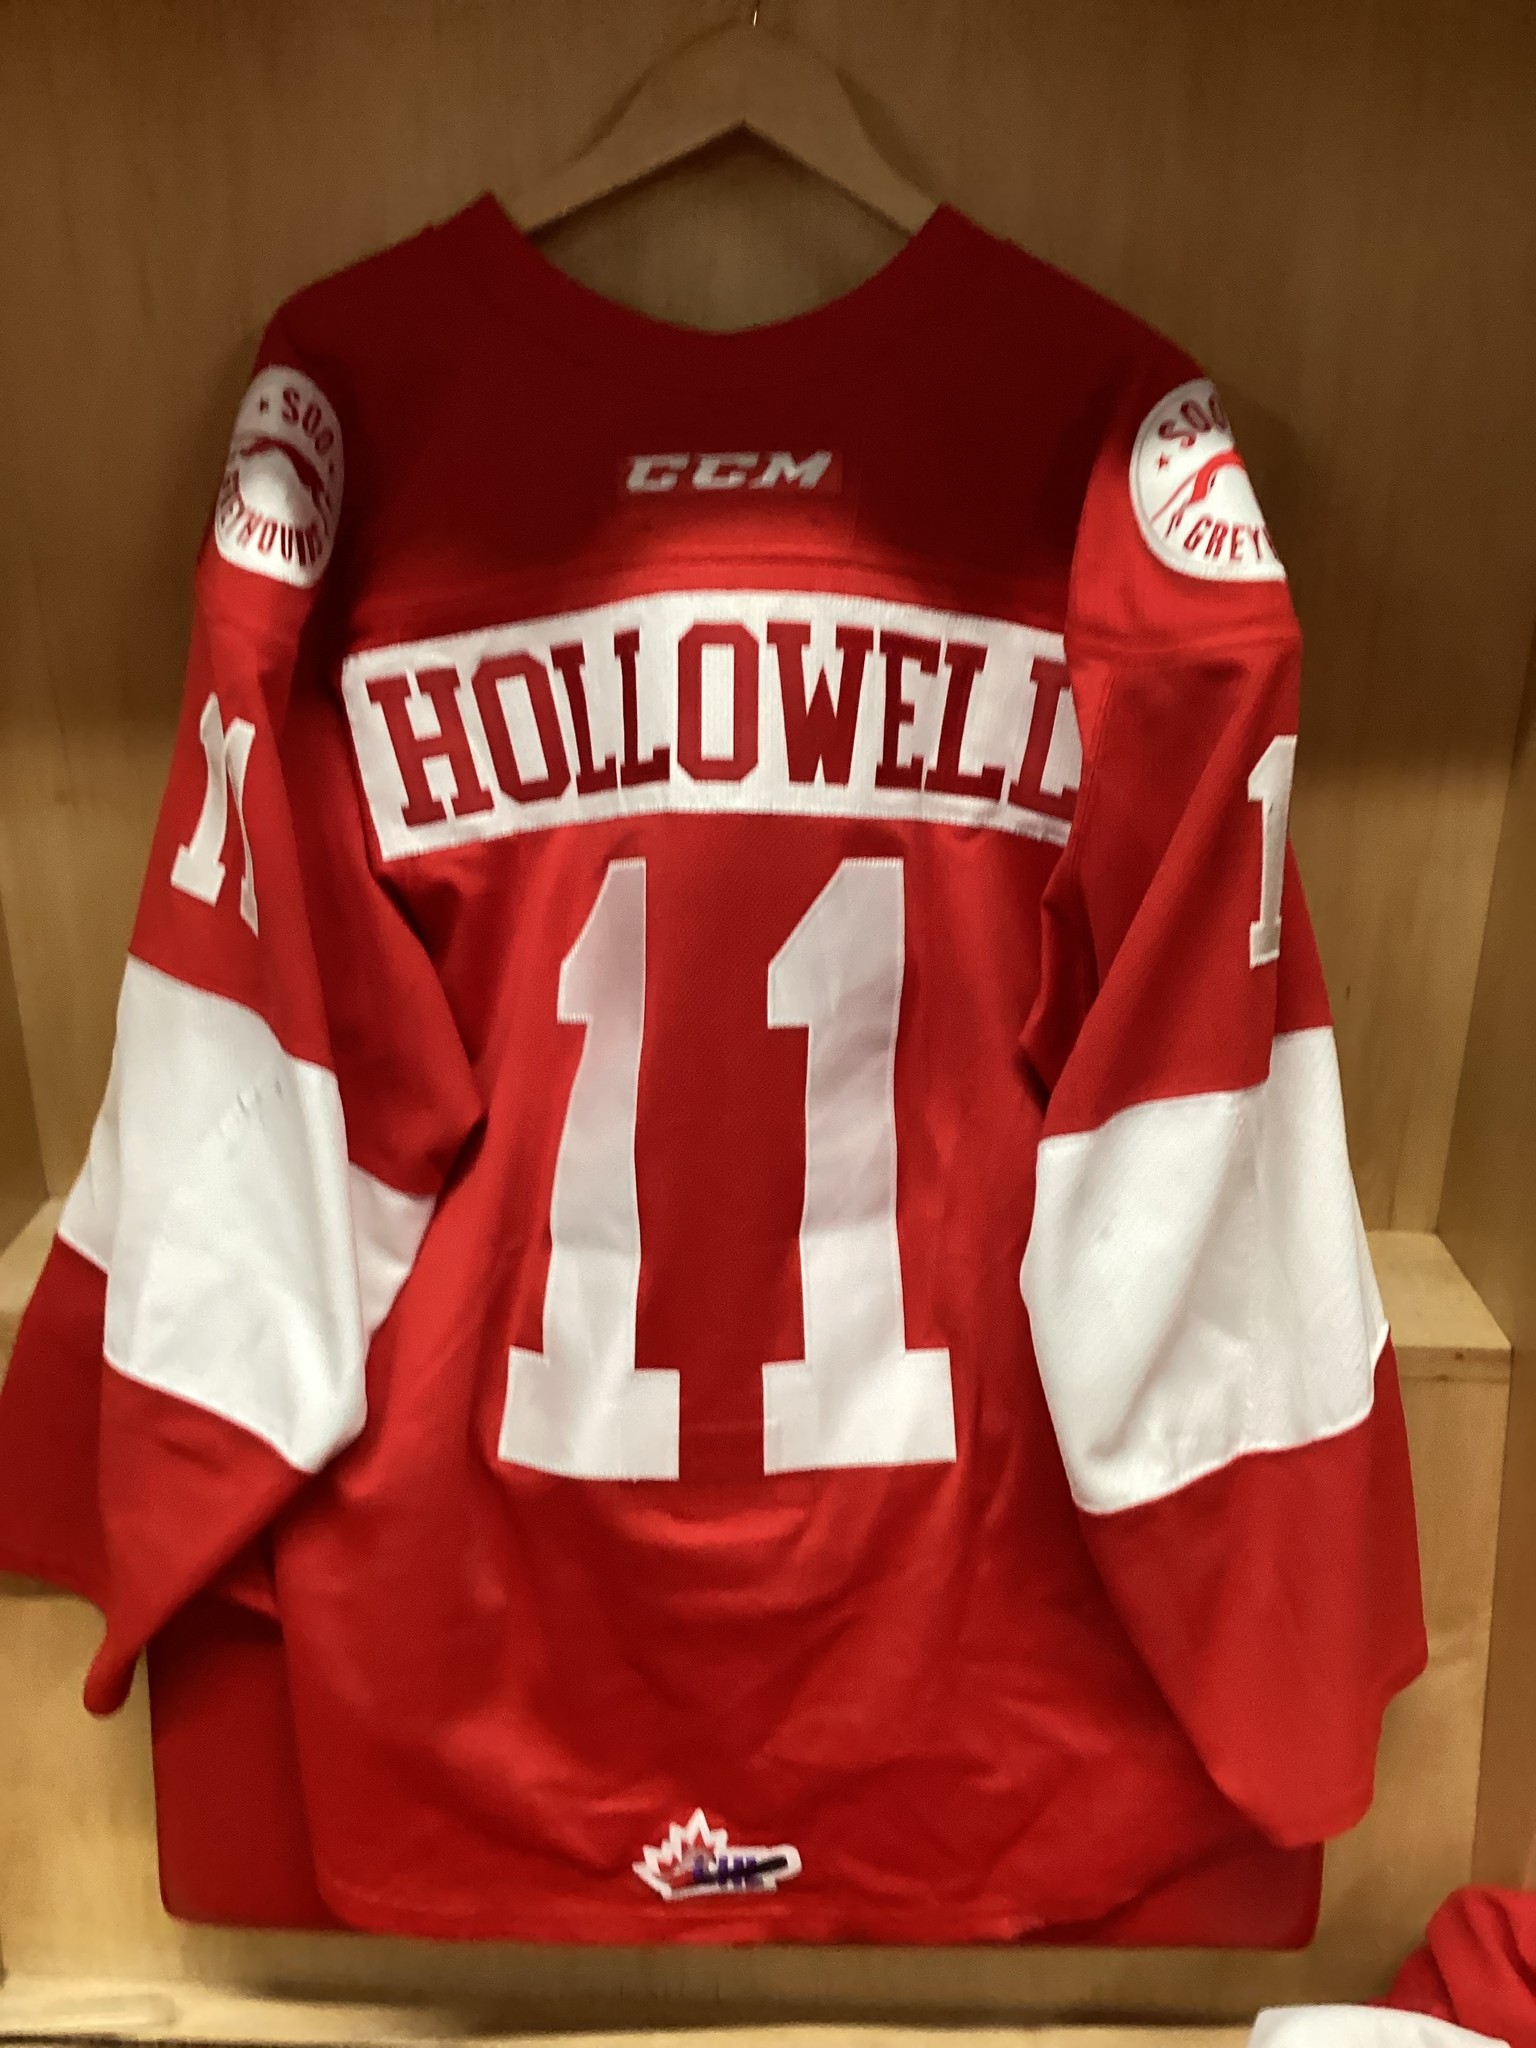 Mac Hollowell #11  Game Worn 18/19 3rd Jersey